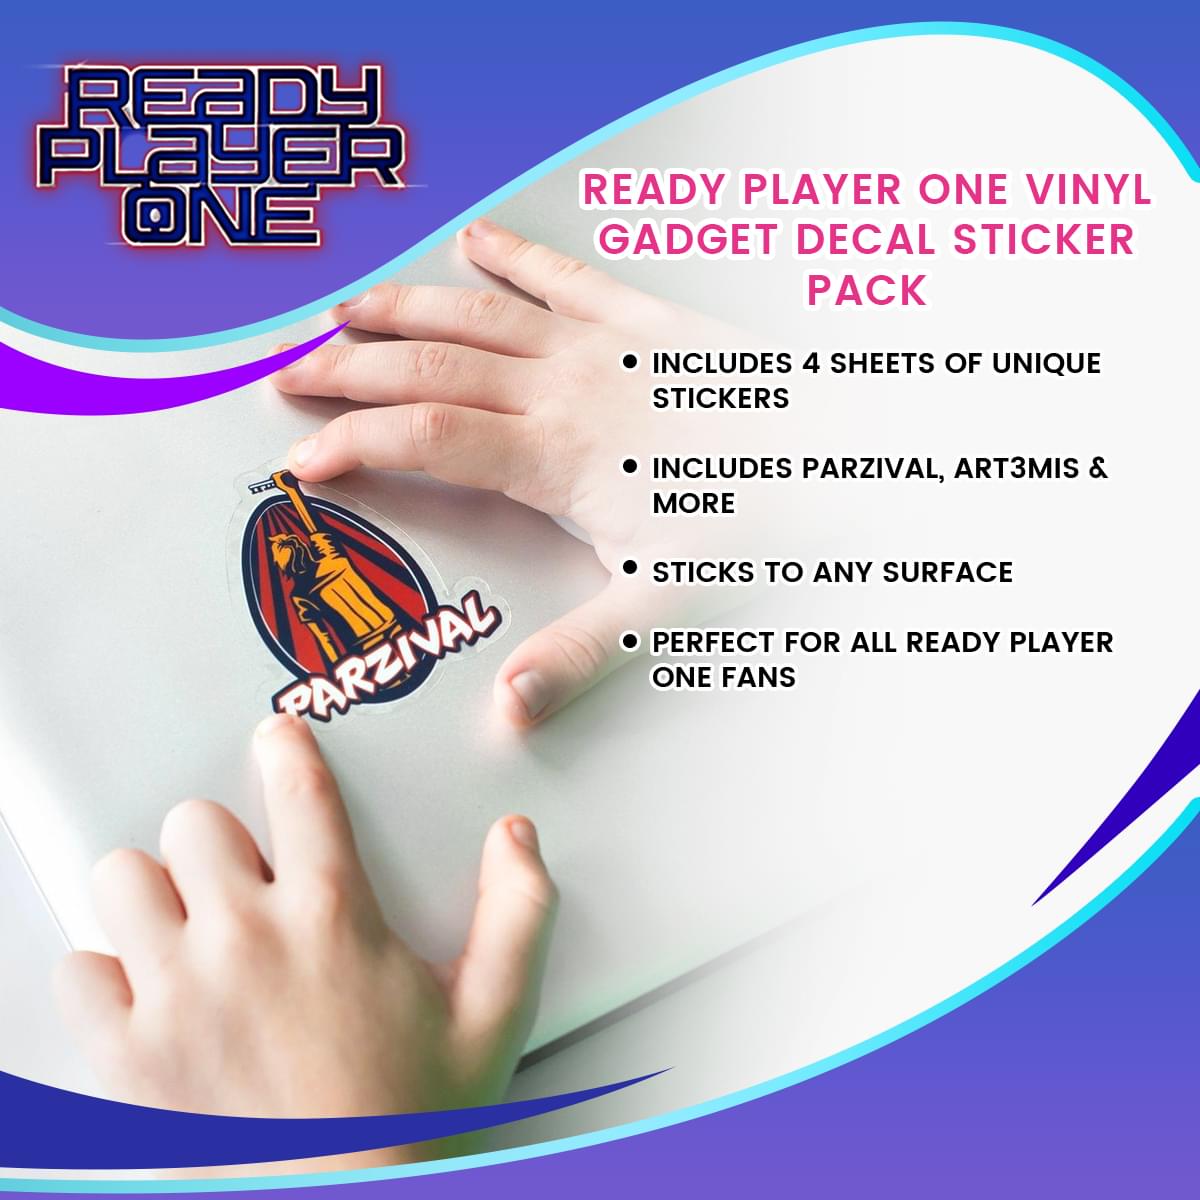 Ready Player One Vinyl Gadget Decal Sticker Pack